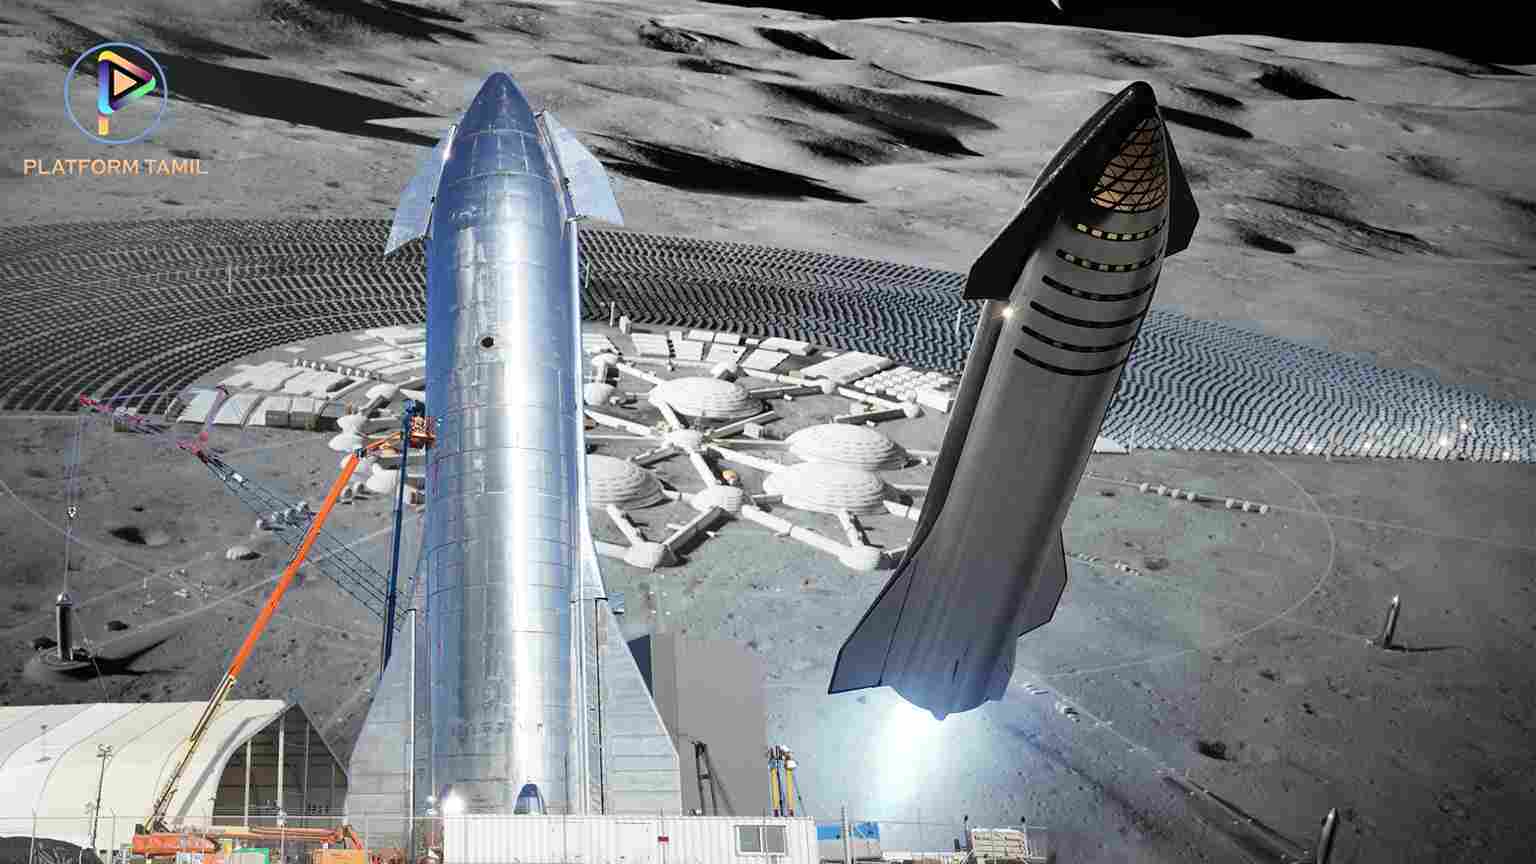 SpaceX Starship - Platform Tamil